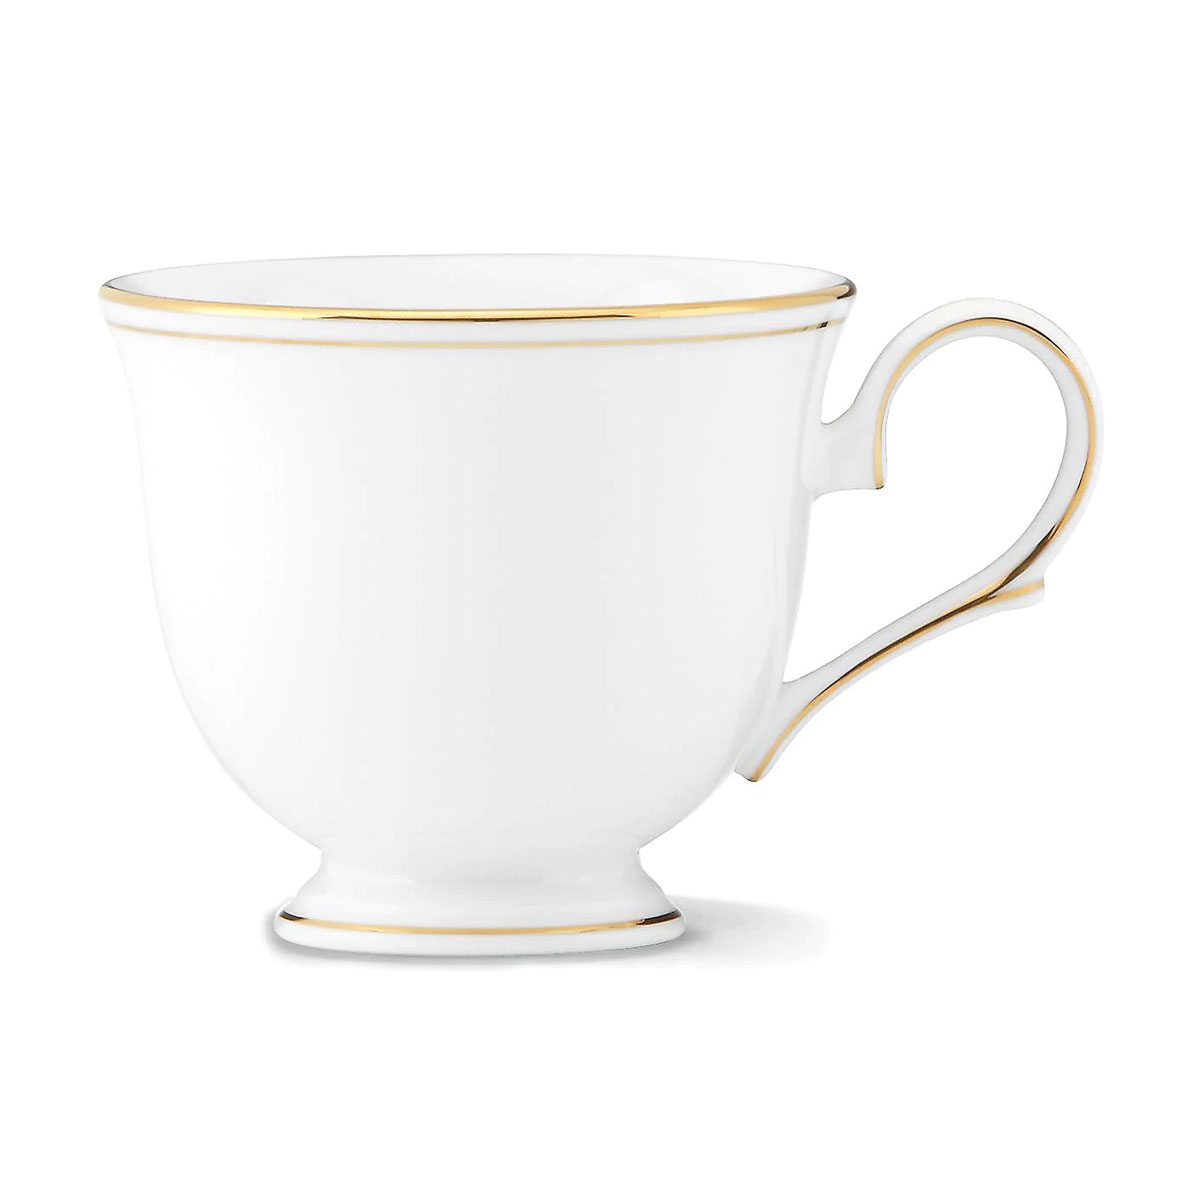 Lenox Federal Gold Tea Cup, Single